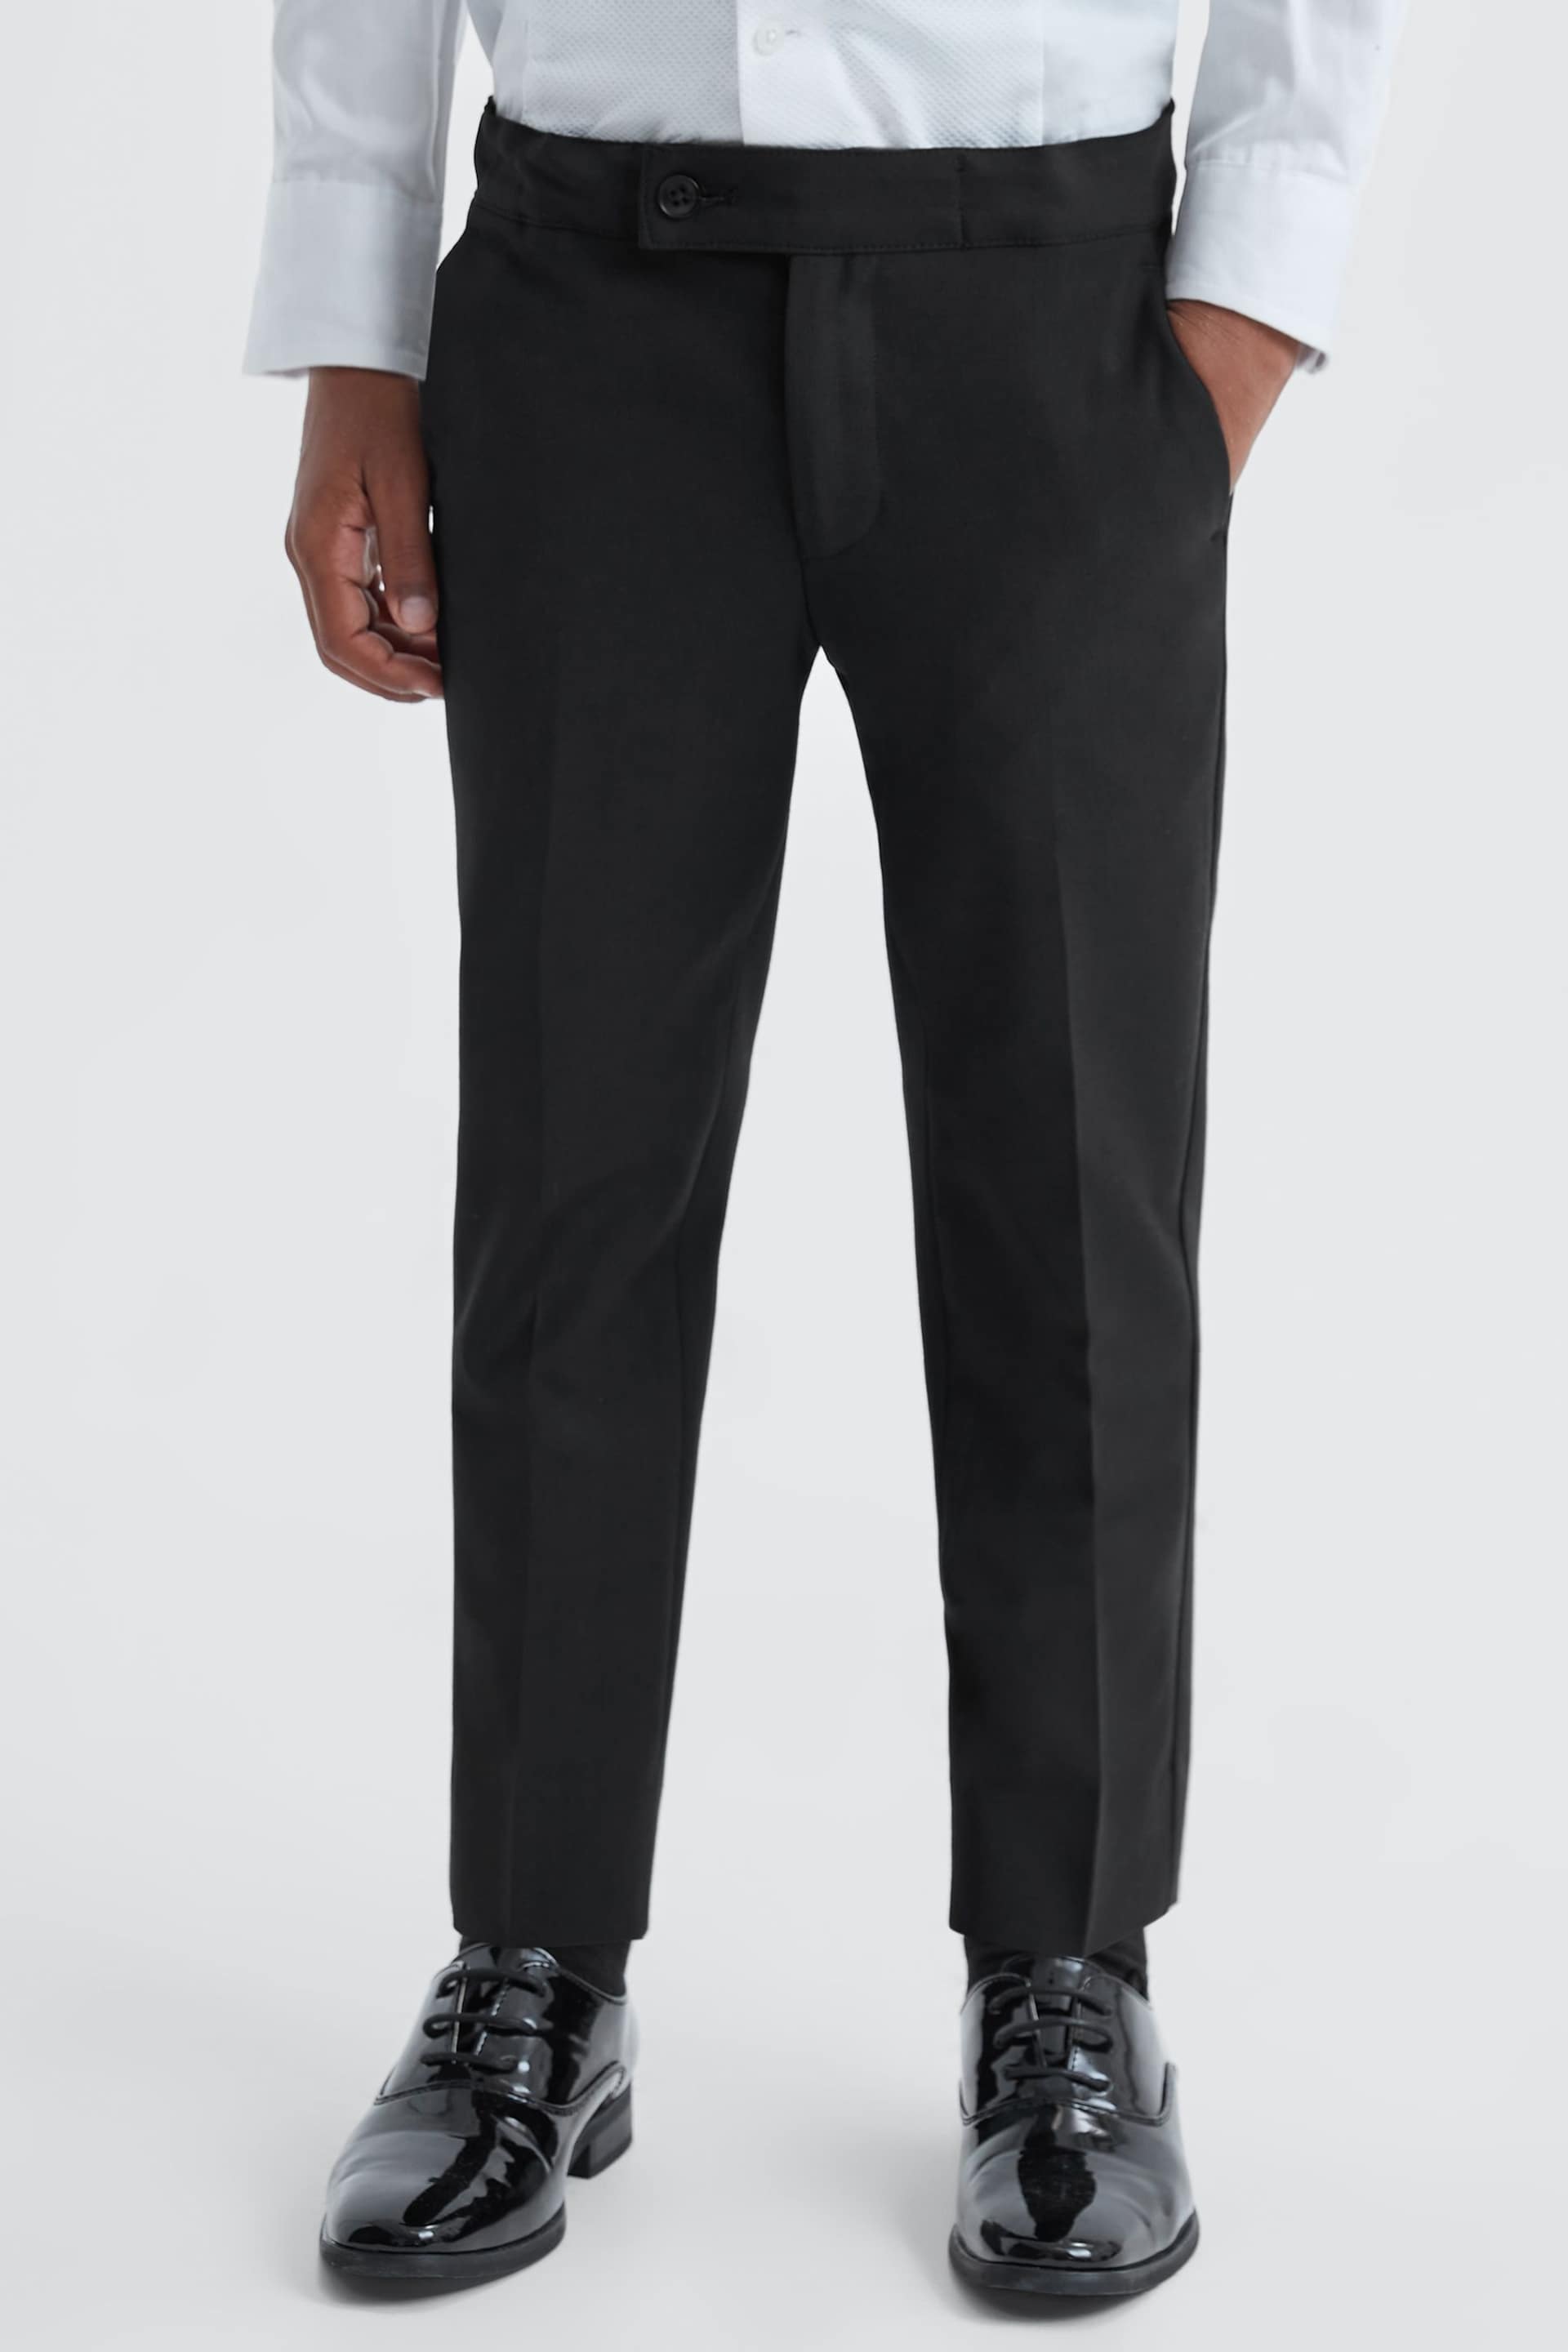 Reiss Black Knightsbridge Junior Tuxedo Trousers - Image 3 of 6